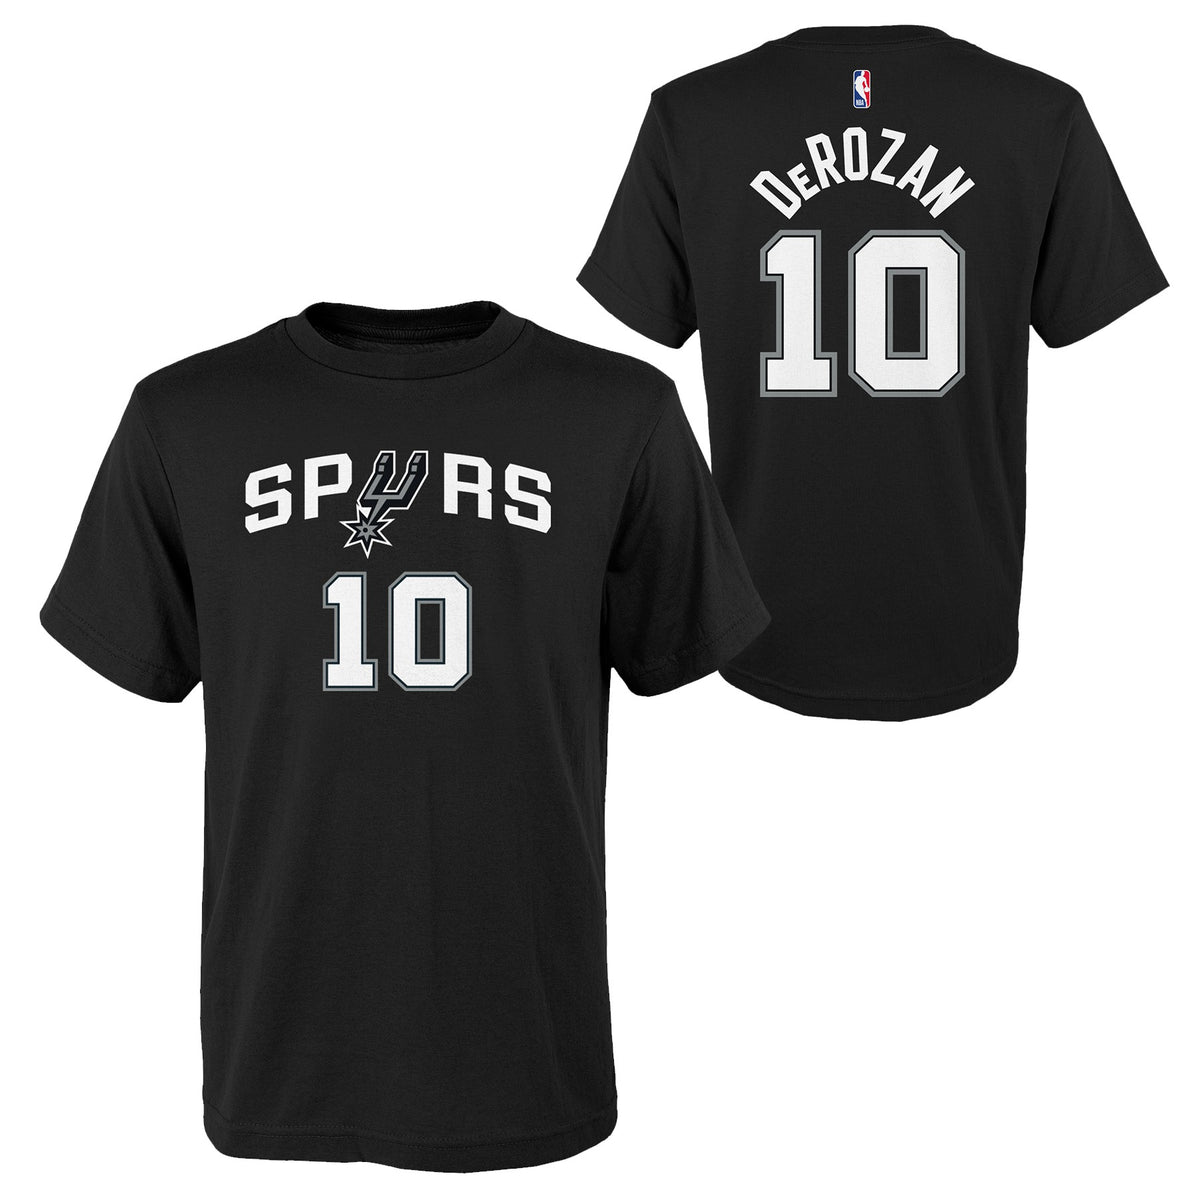 San Antonio Spurs Polo Shirt Mens Large Black Short Sleeve Cotton NBA